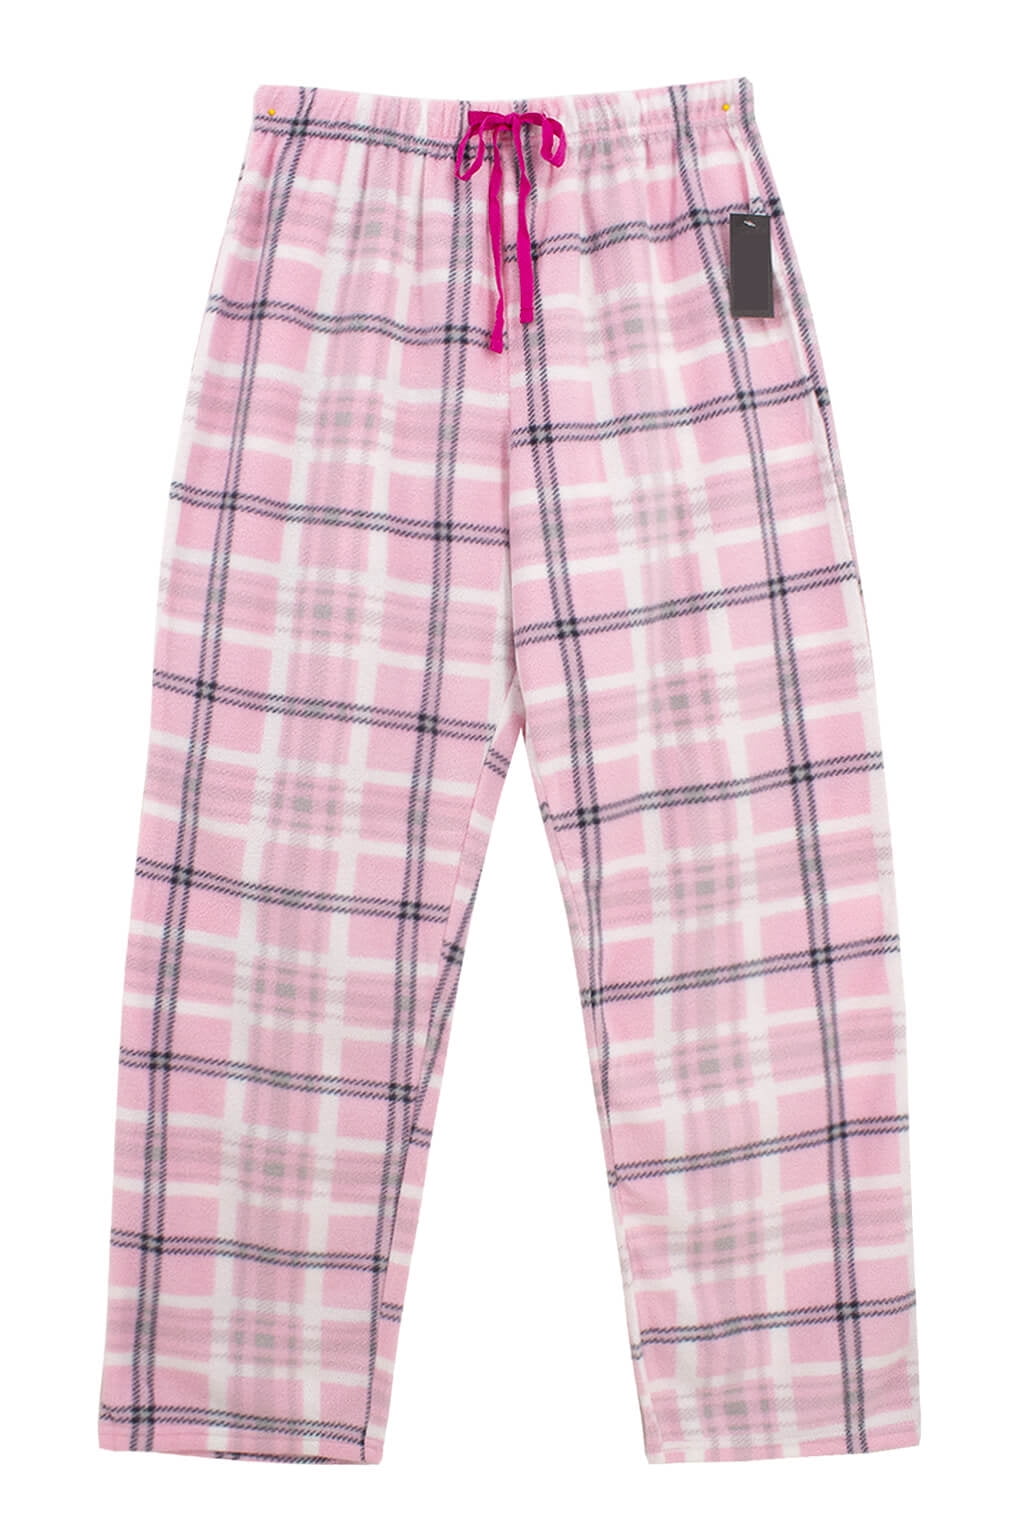 Womens Ladies Plush Fleece PJ Pajama Pants 3122HRT, Pink Heart